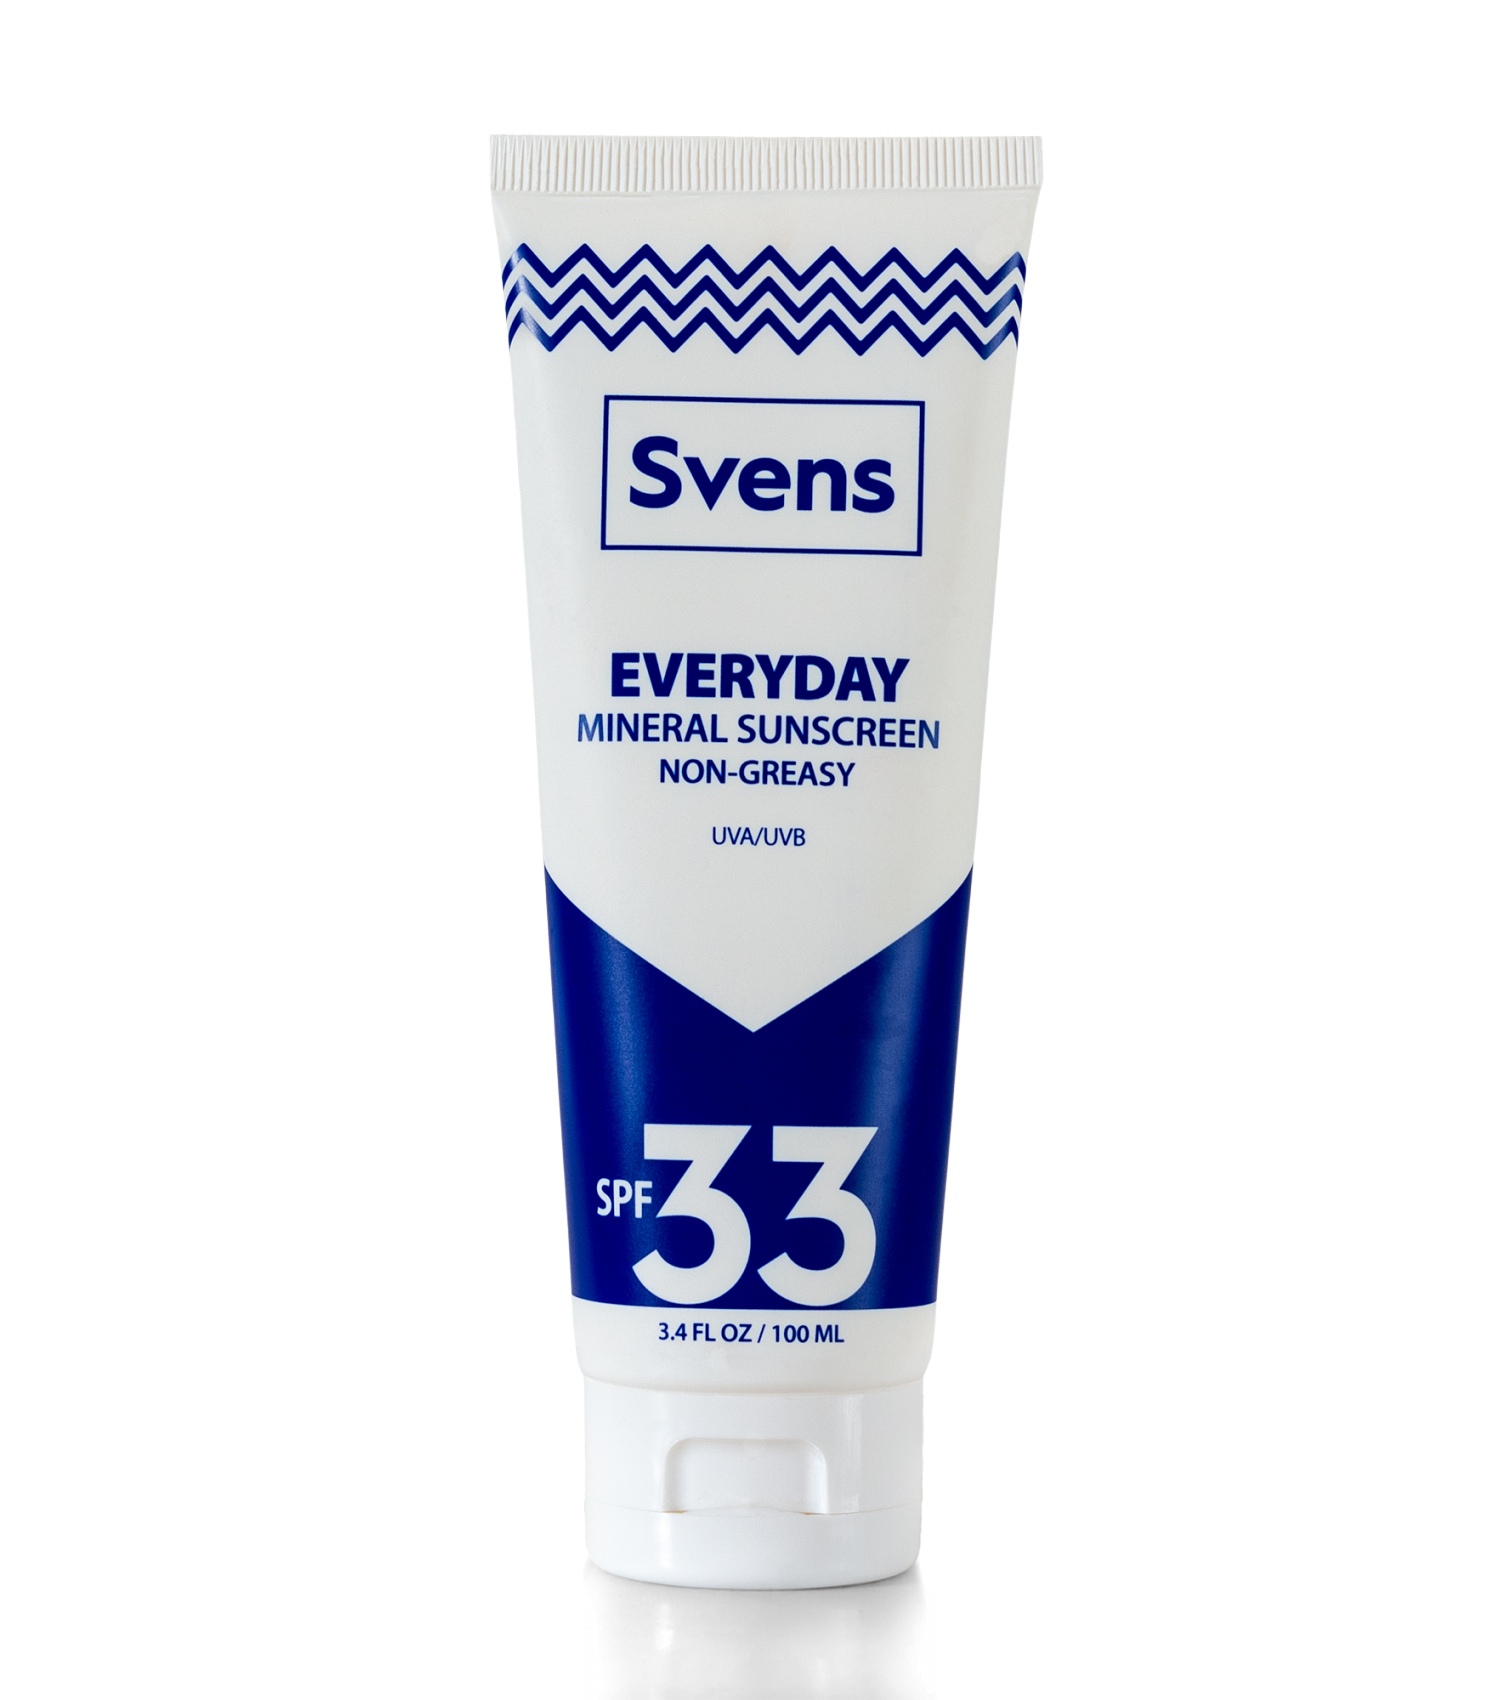 Svens Everyday Mineral Sunscreen SPF 33